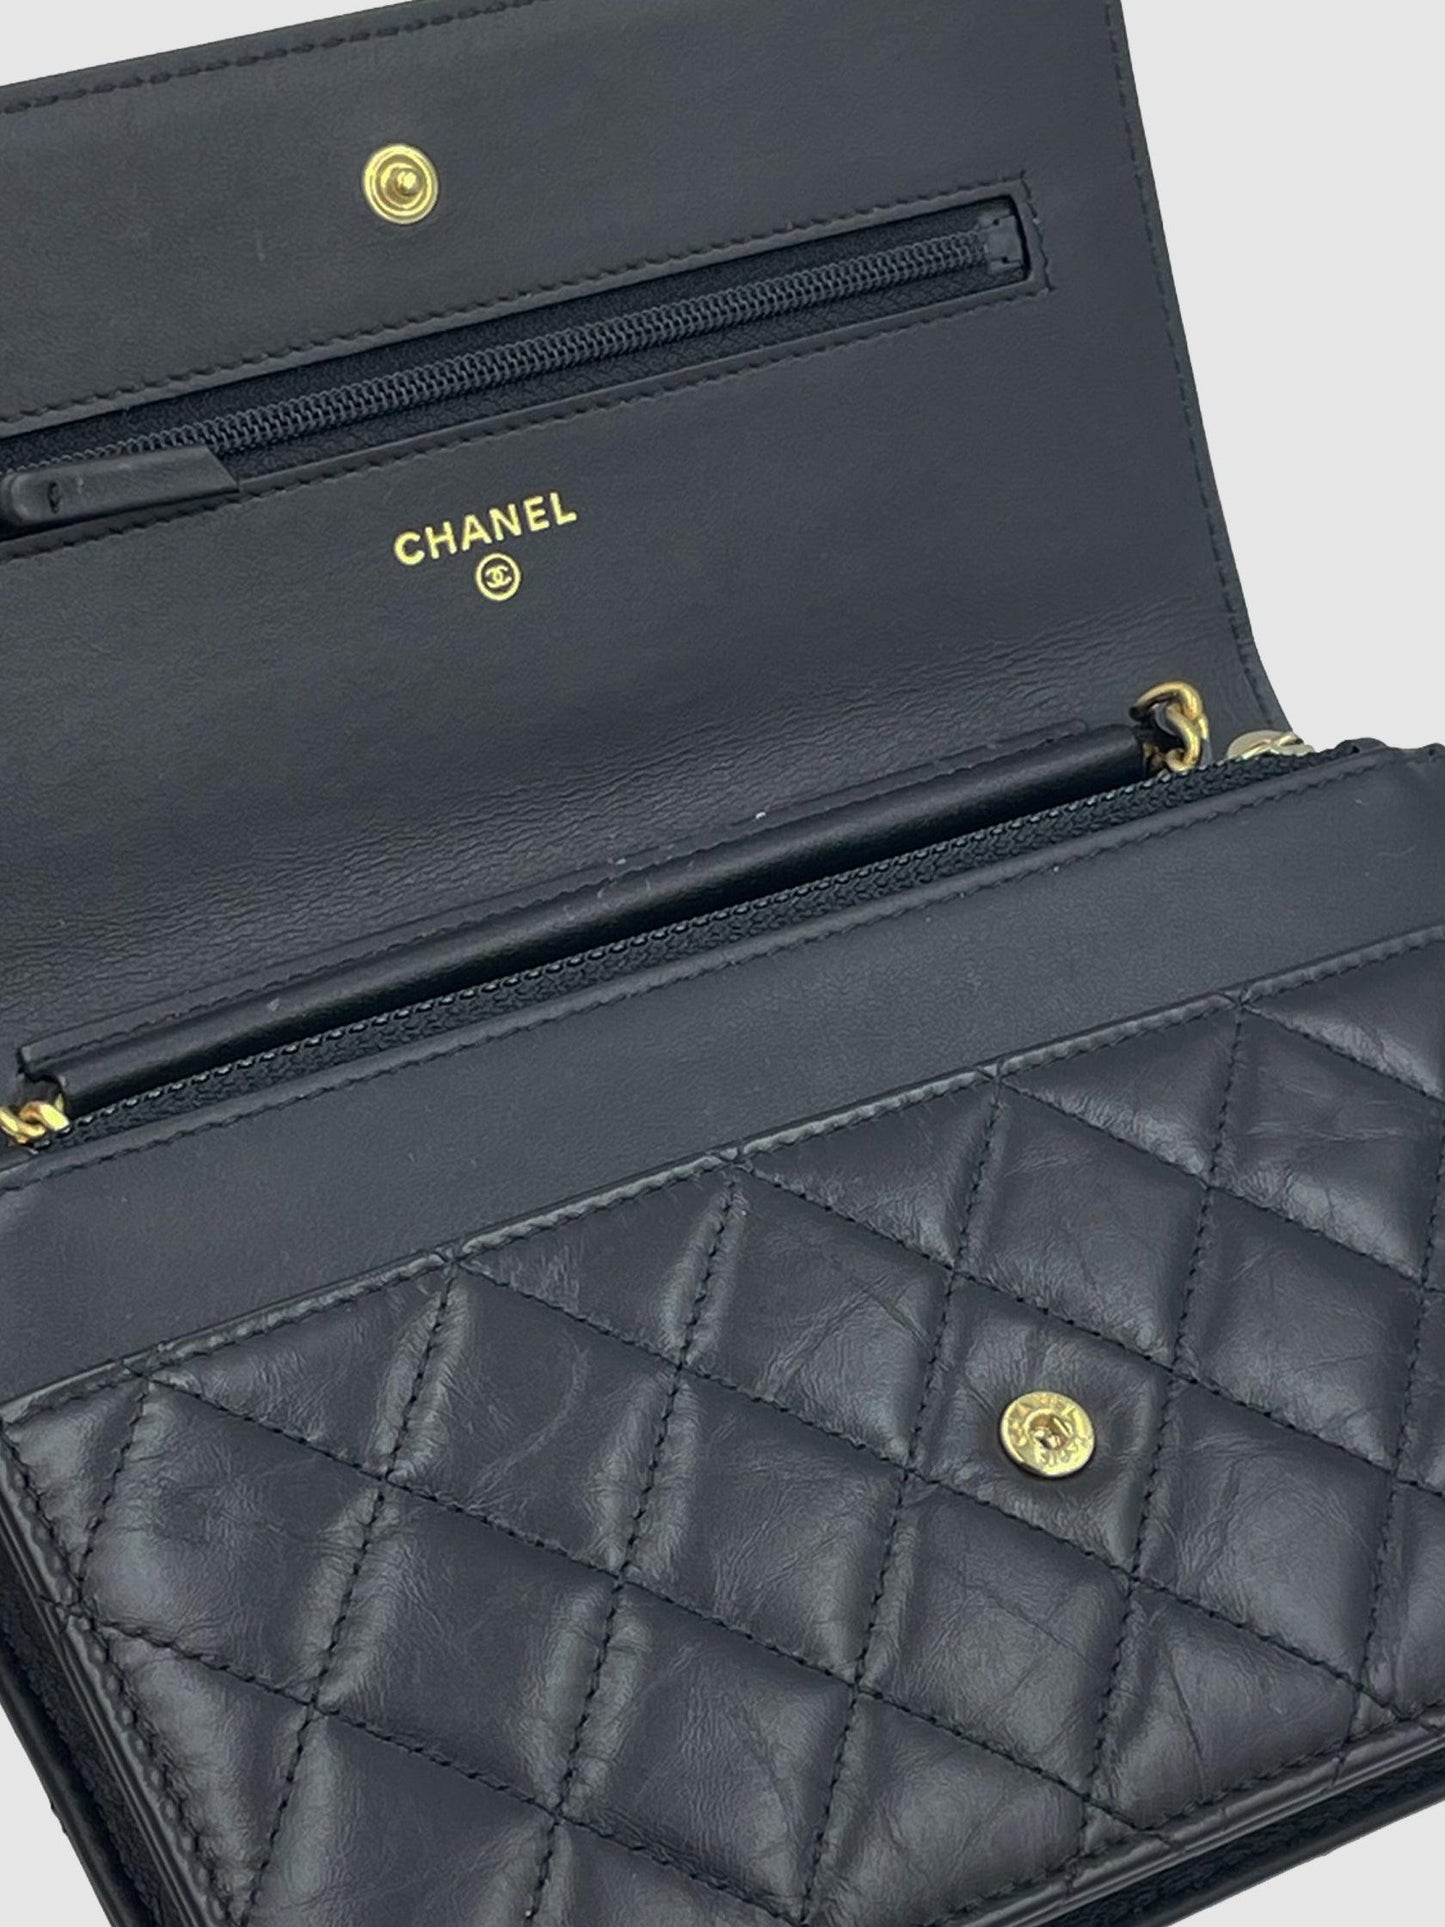 Chanel - Second Nature Boutique